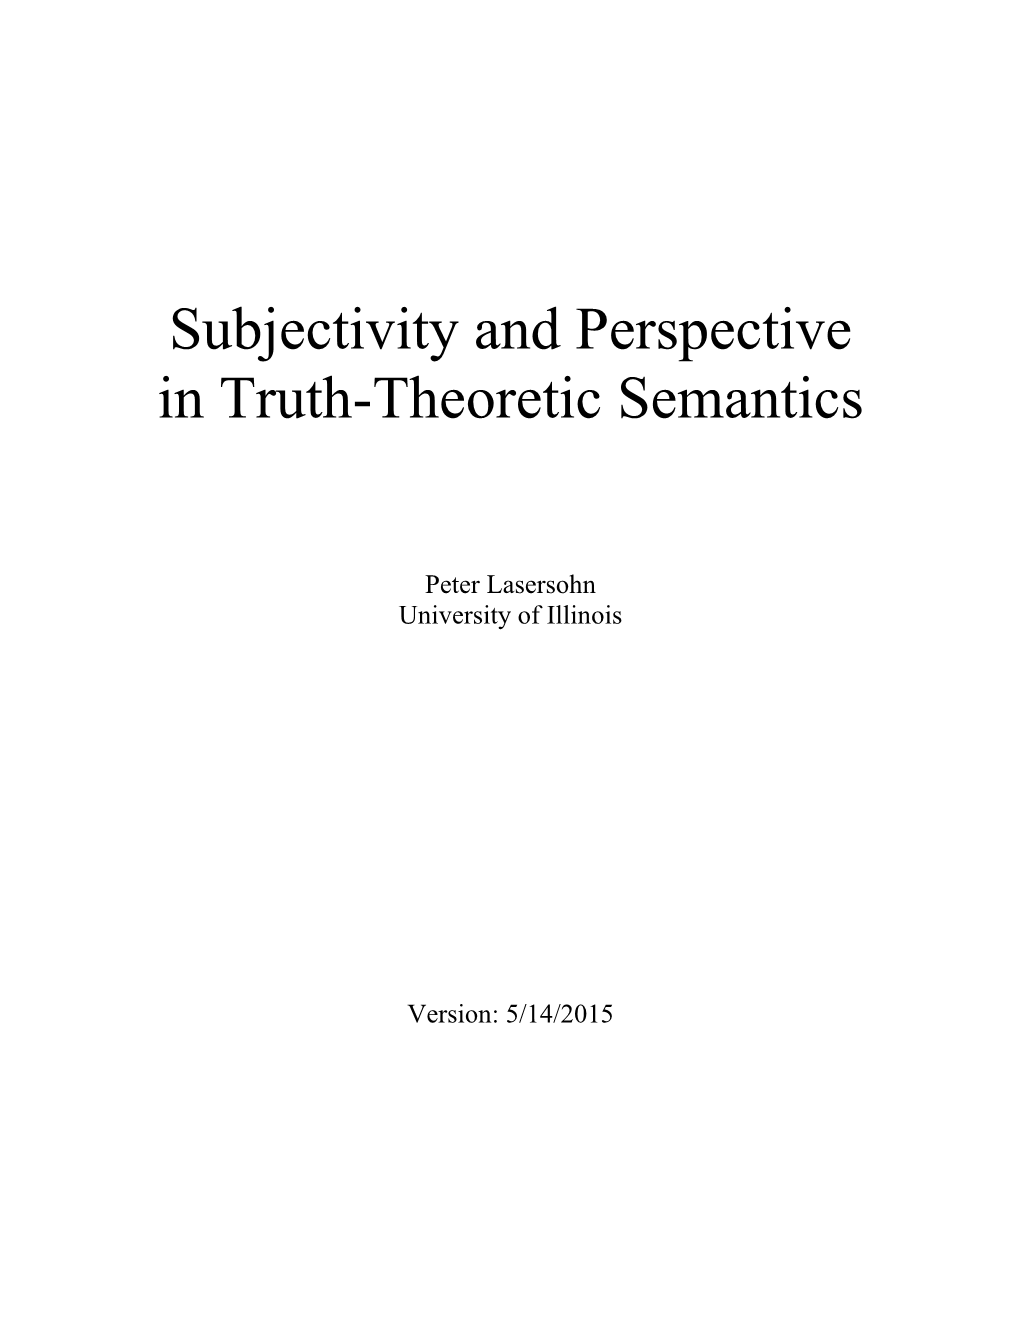 Subjectivity and Perspective in Truth-Theoretic Semantics